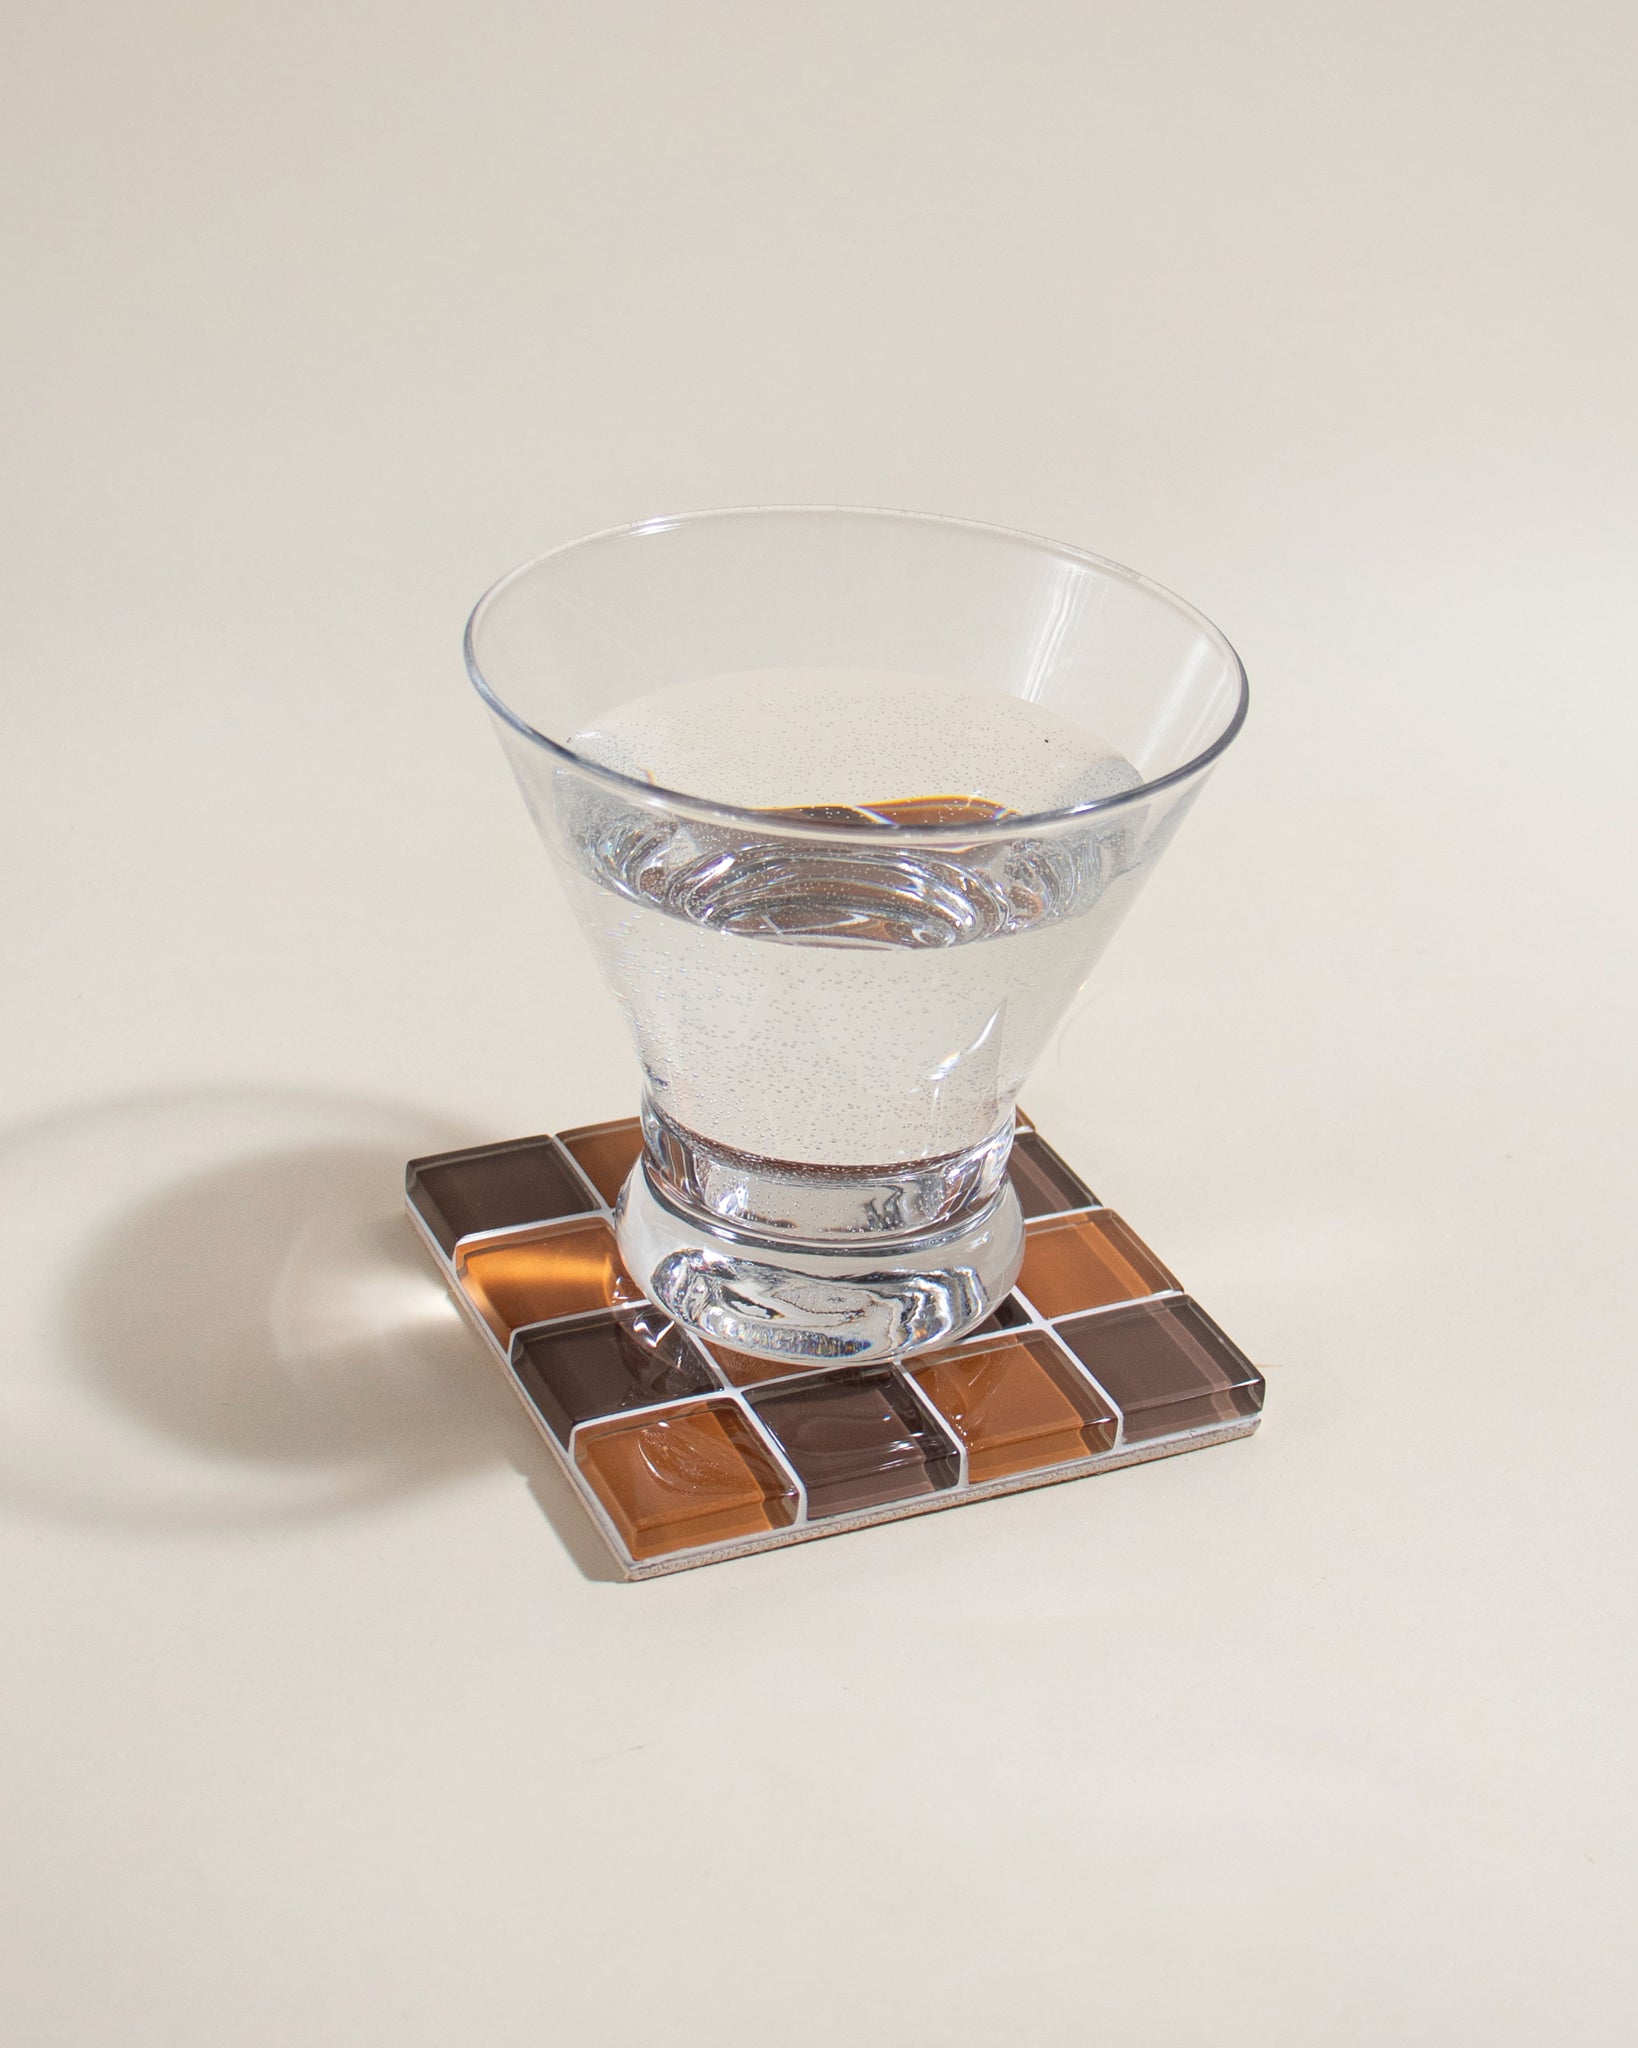 GLASS TILE COASTER - Salted Caramel Dark Chocolate